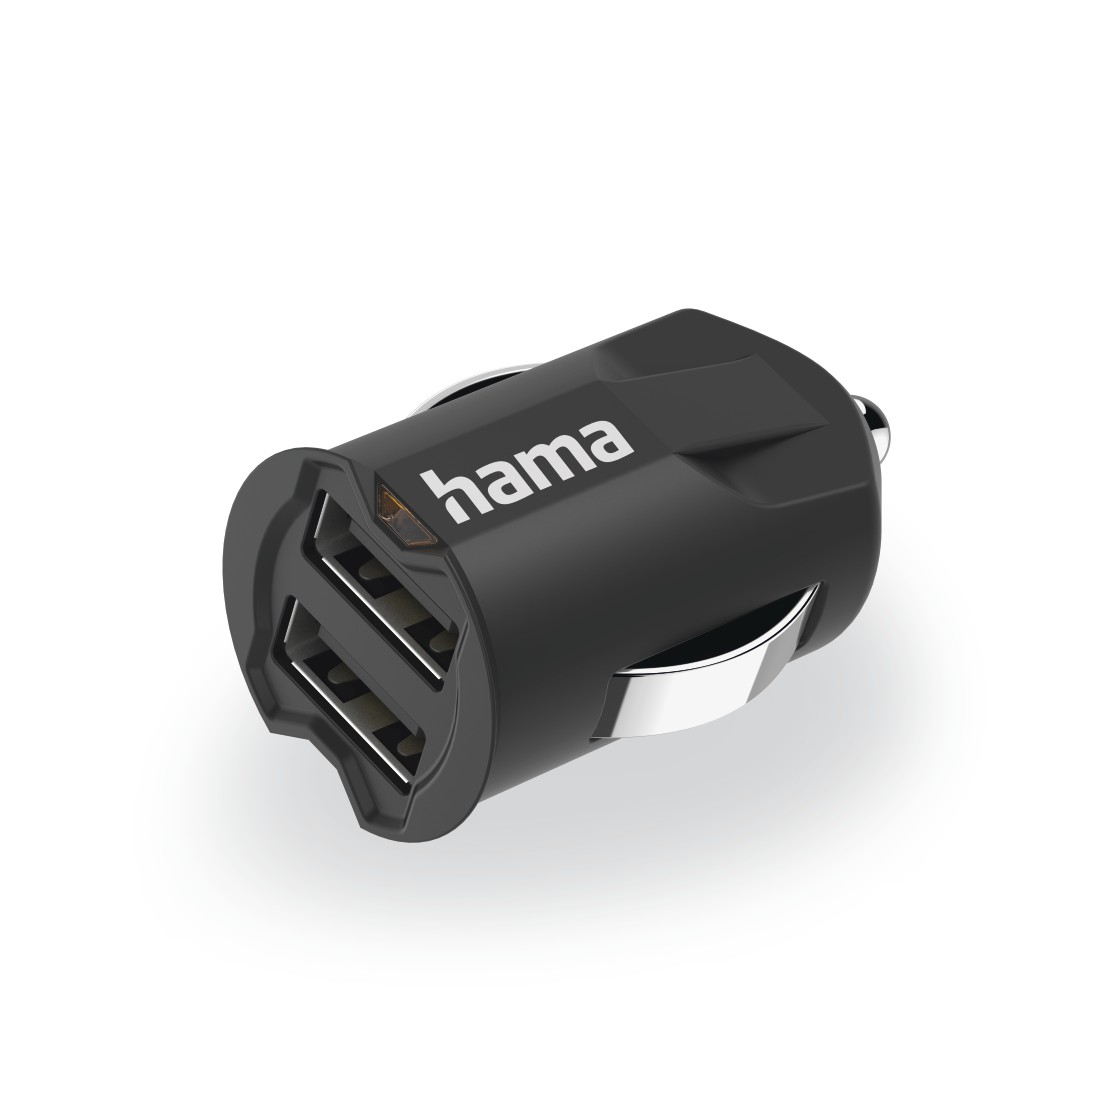 00178354 Hama "Basic" Car Charger, 2-port USB, 2.1 A, black